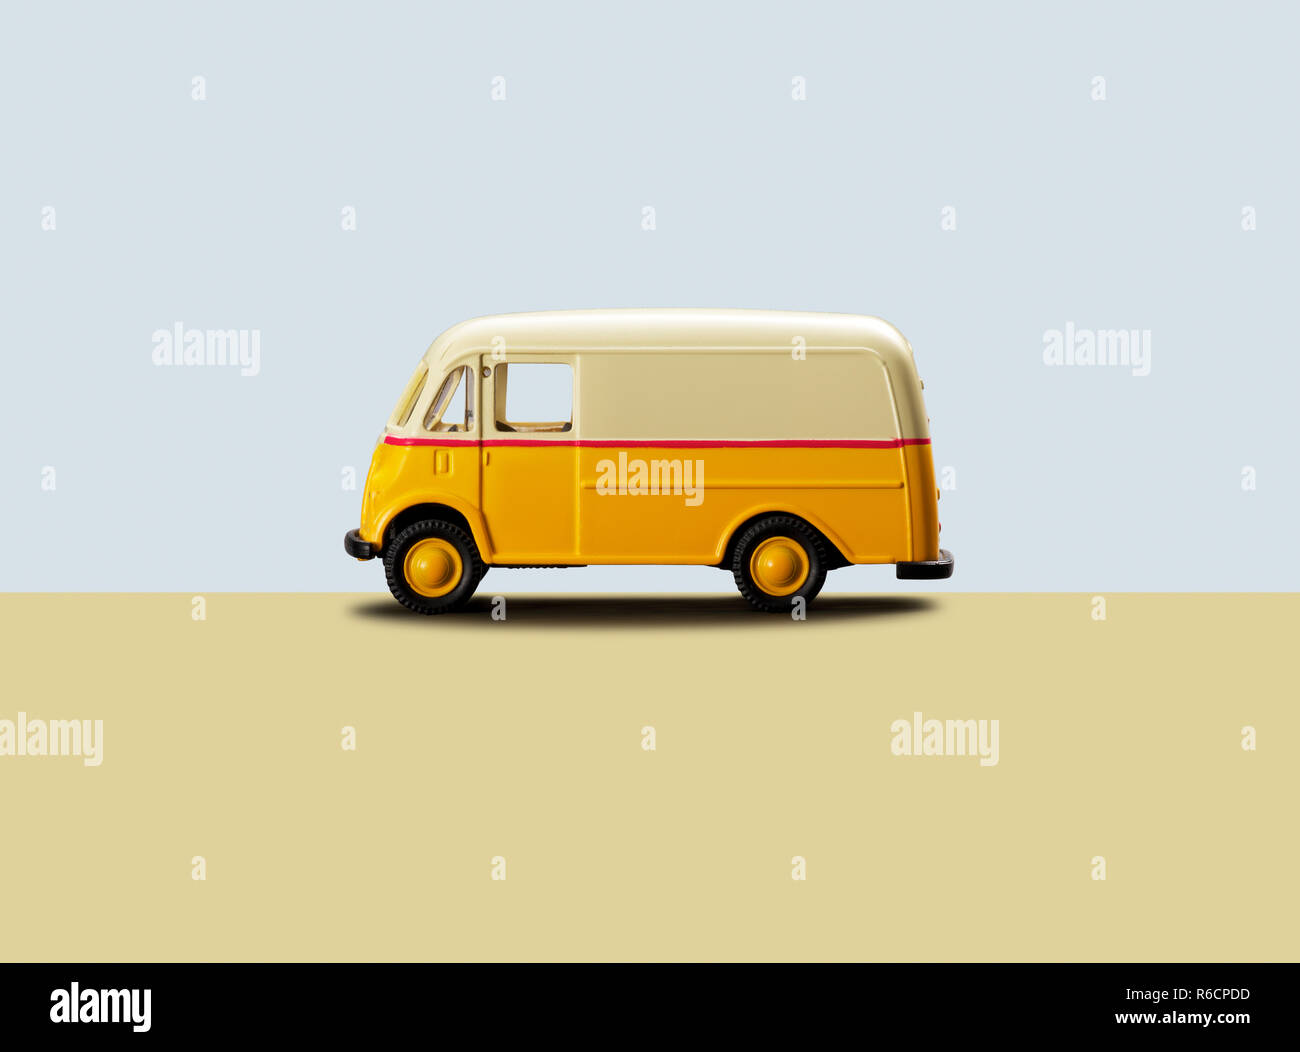 Vw camper van toy model Stock Photo - Alamy